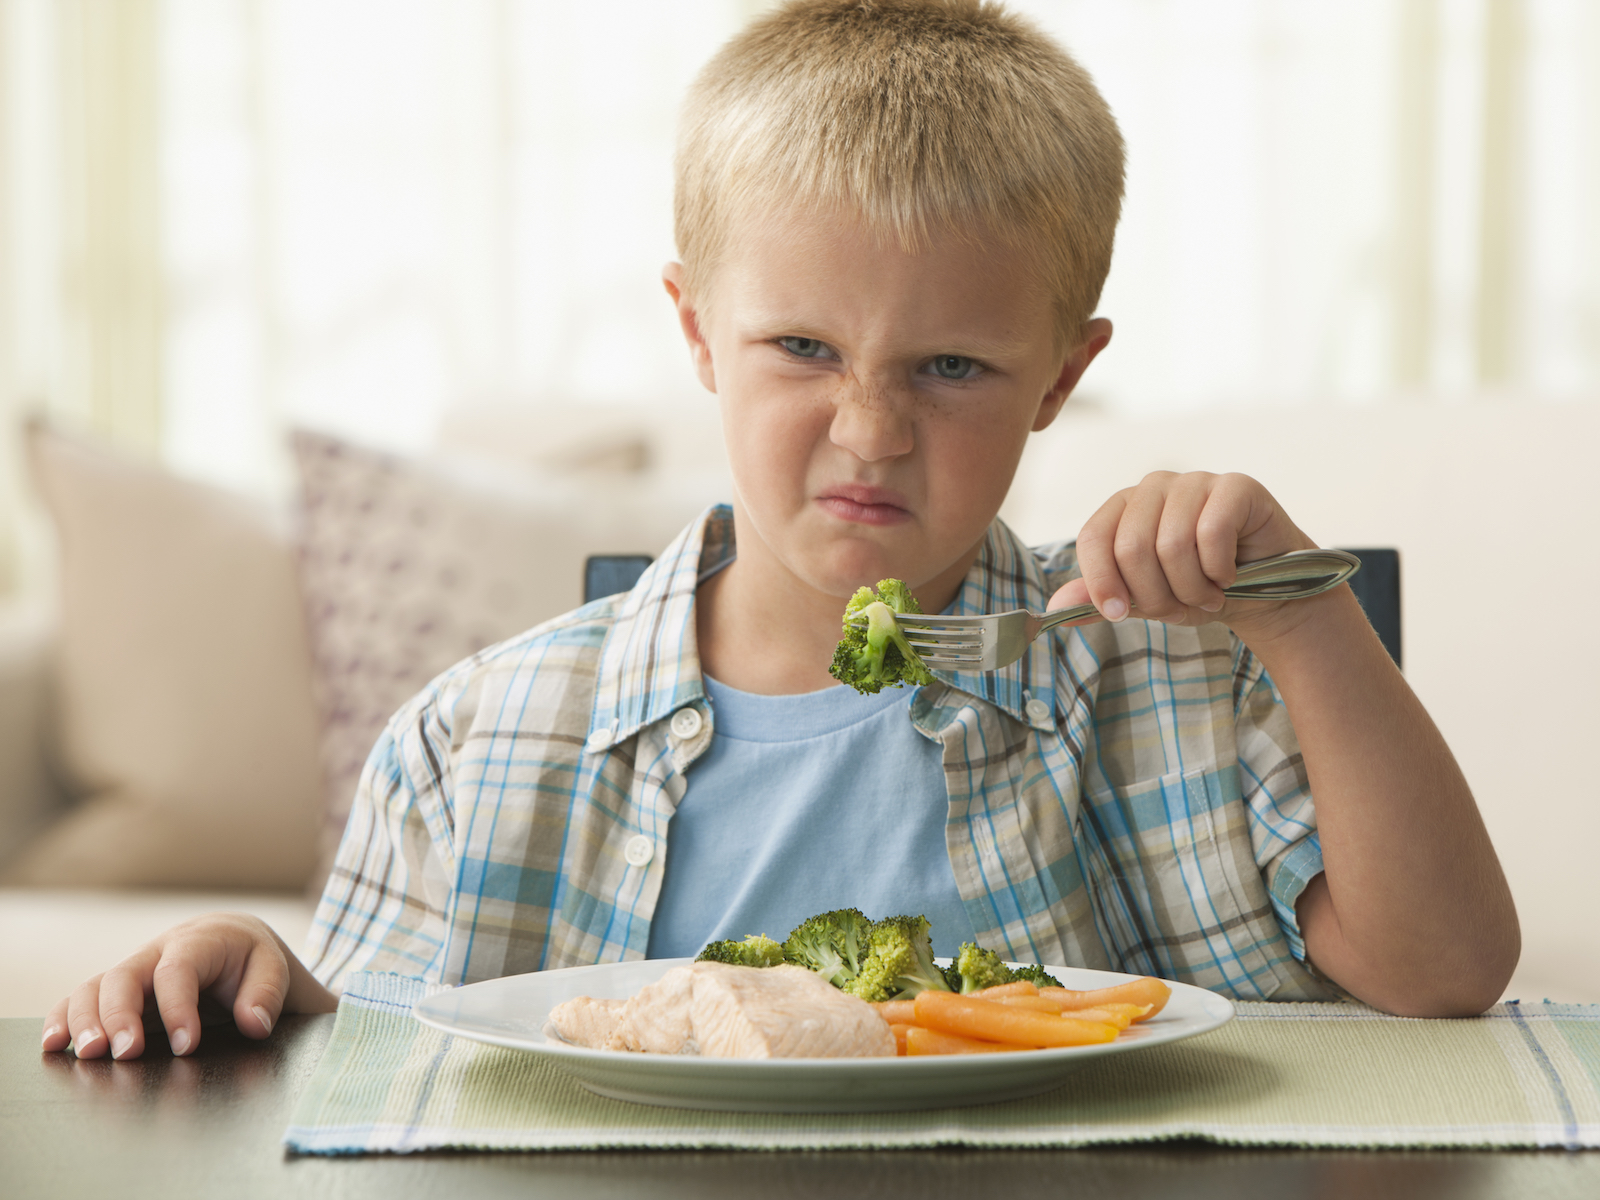 Unhappy Caucasian boy eating vegetables